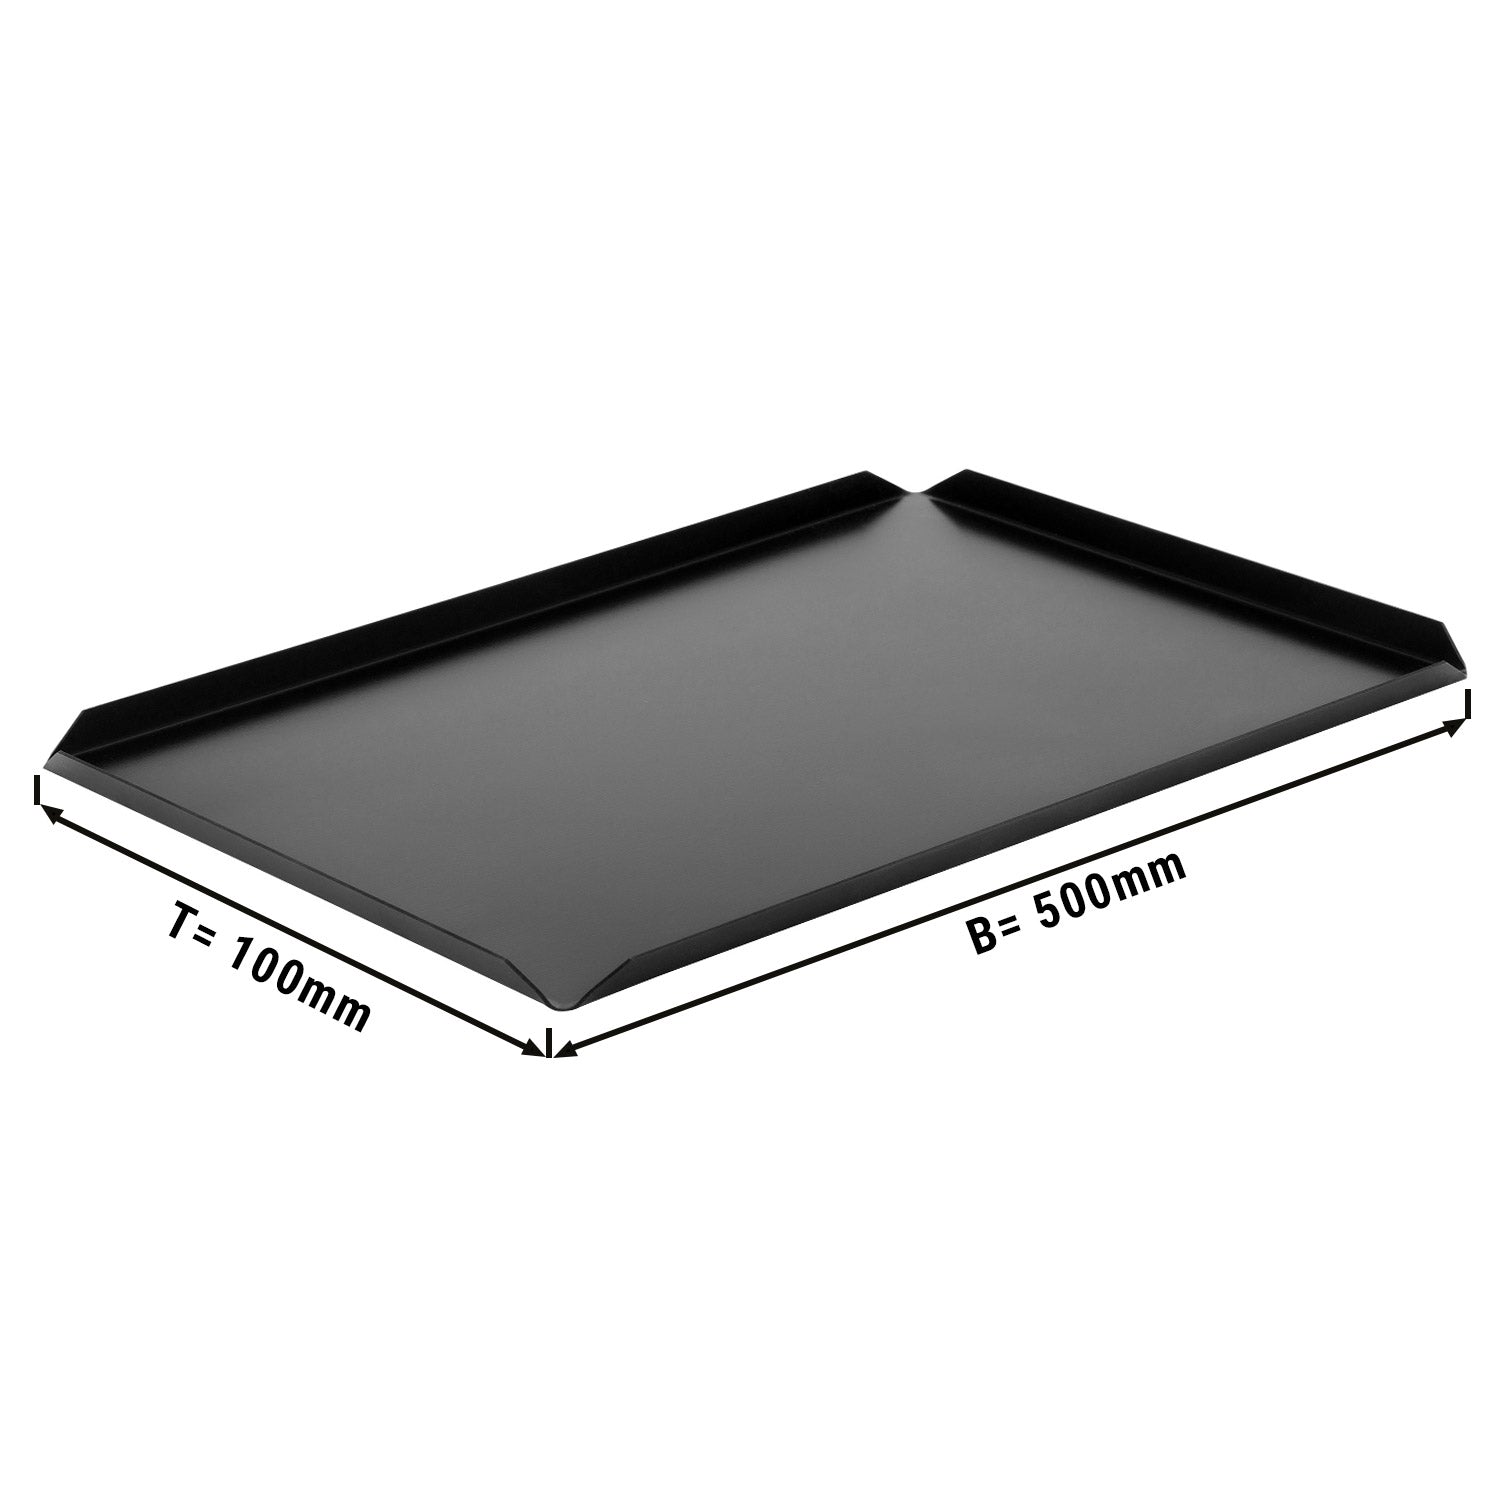 (5 stk.) Slik- og præsentationsplade i aluminium - 500 x 100 x 10 mm - Sort